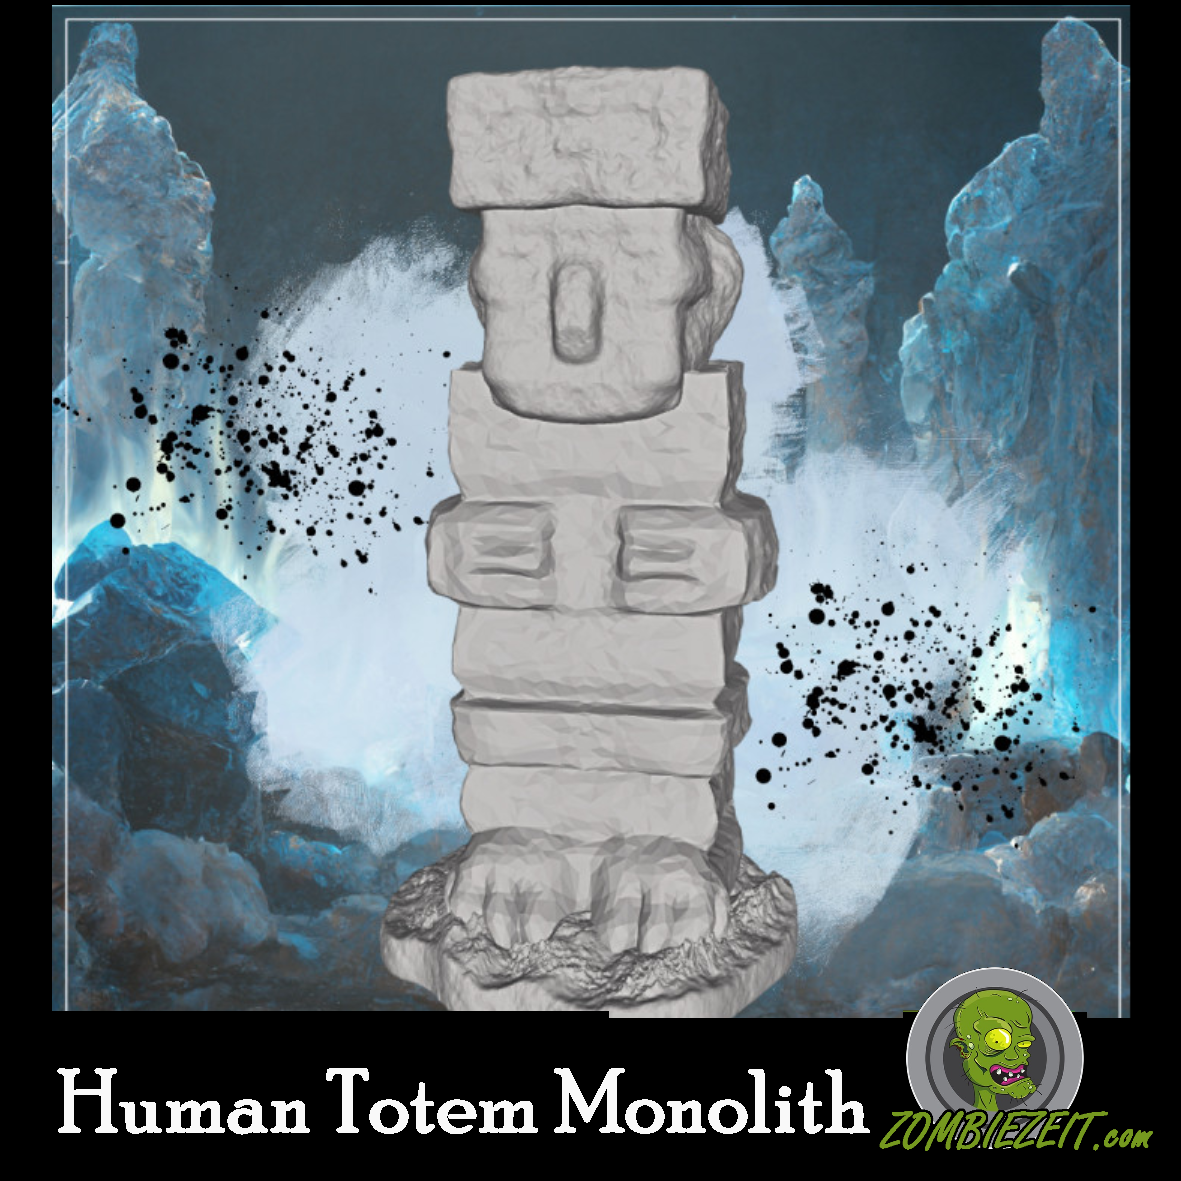 Human Totem Rock Monolith